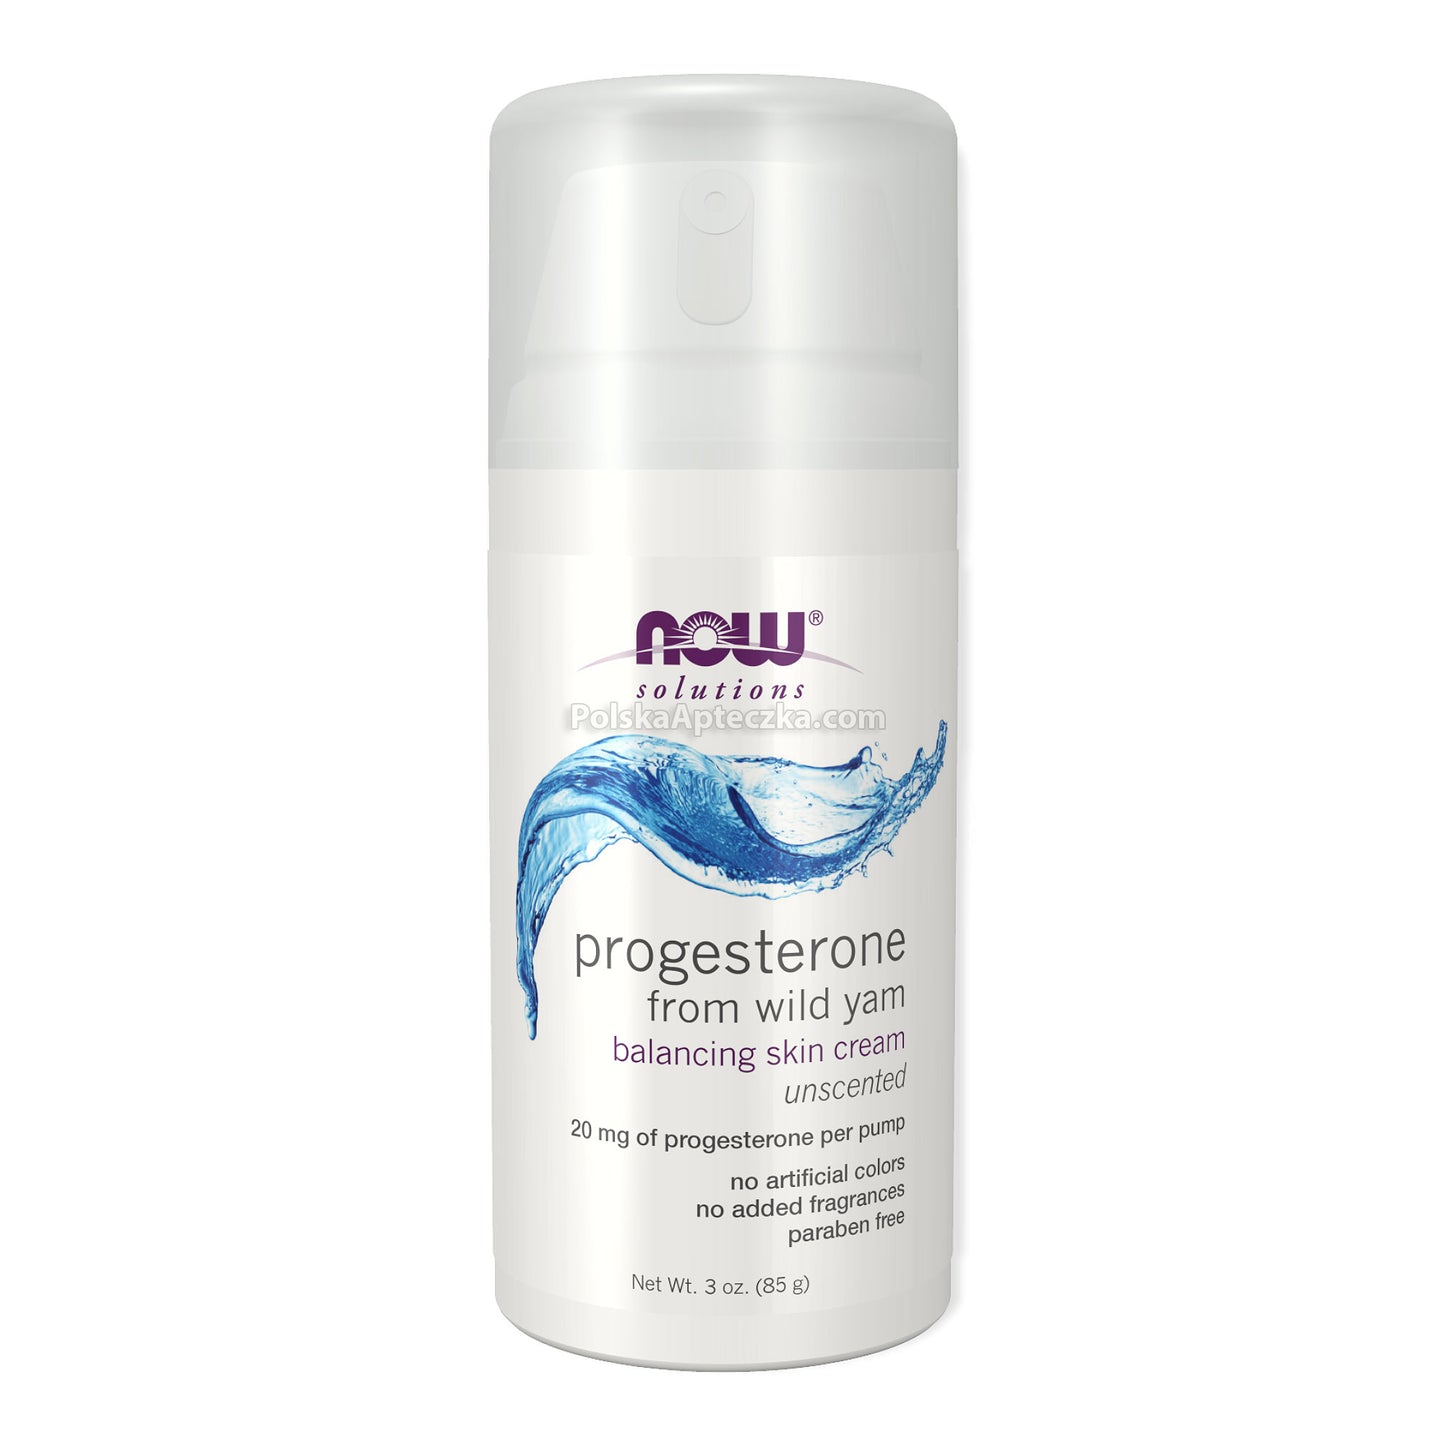 progesterone 20mg/pump cream